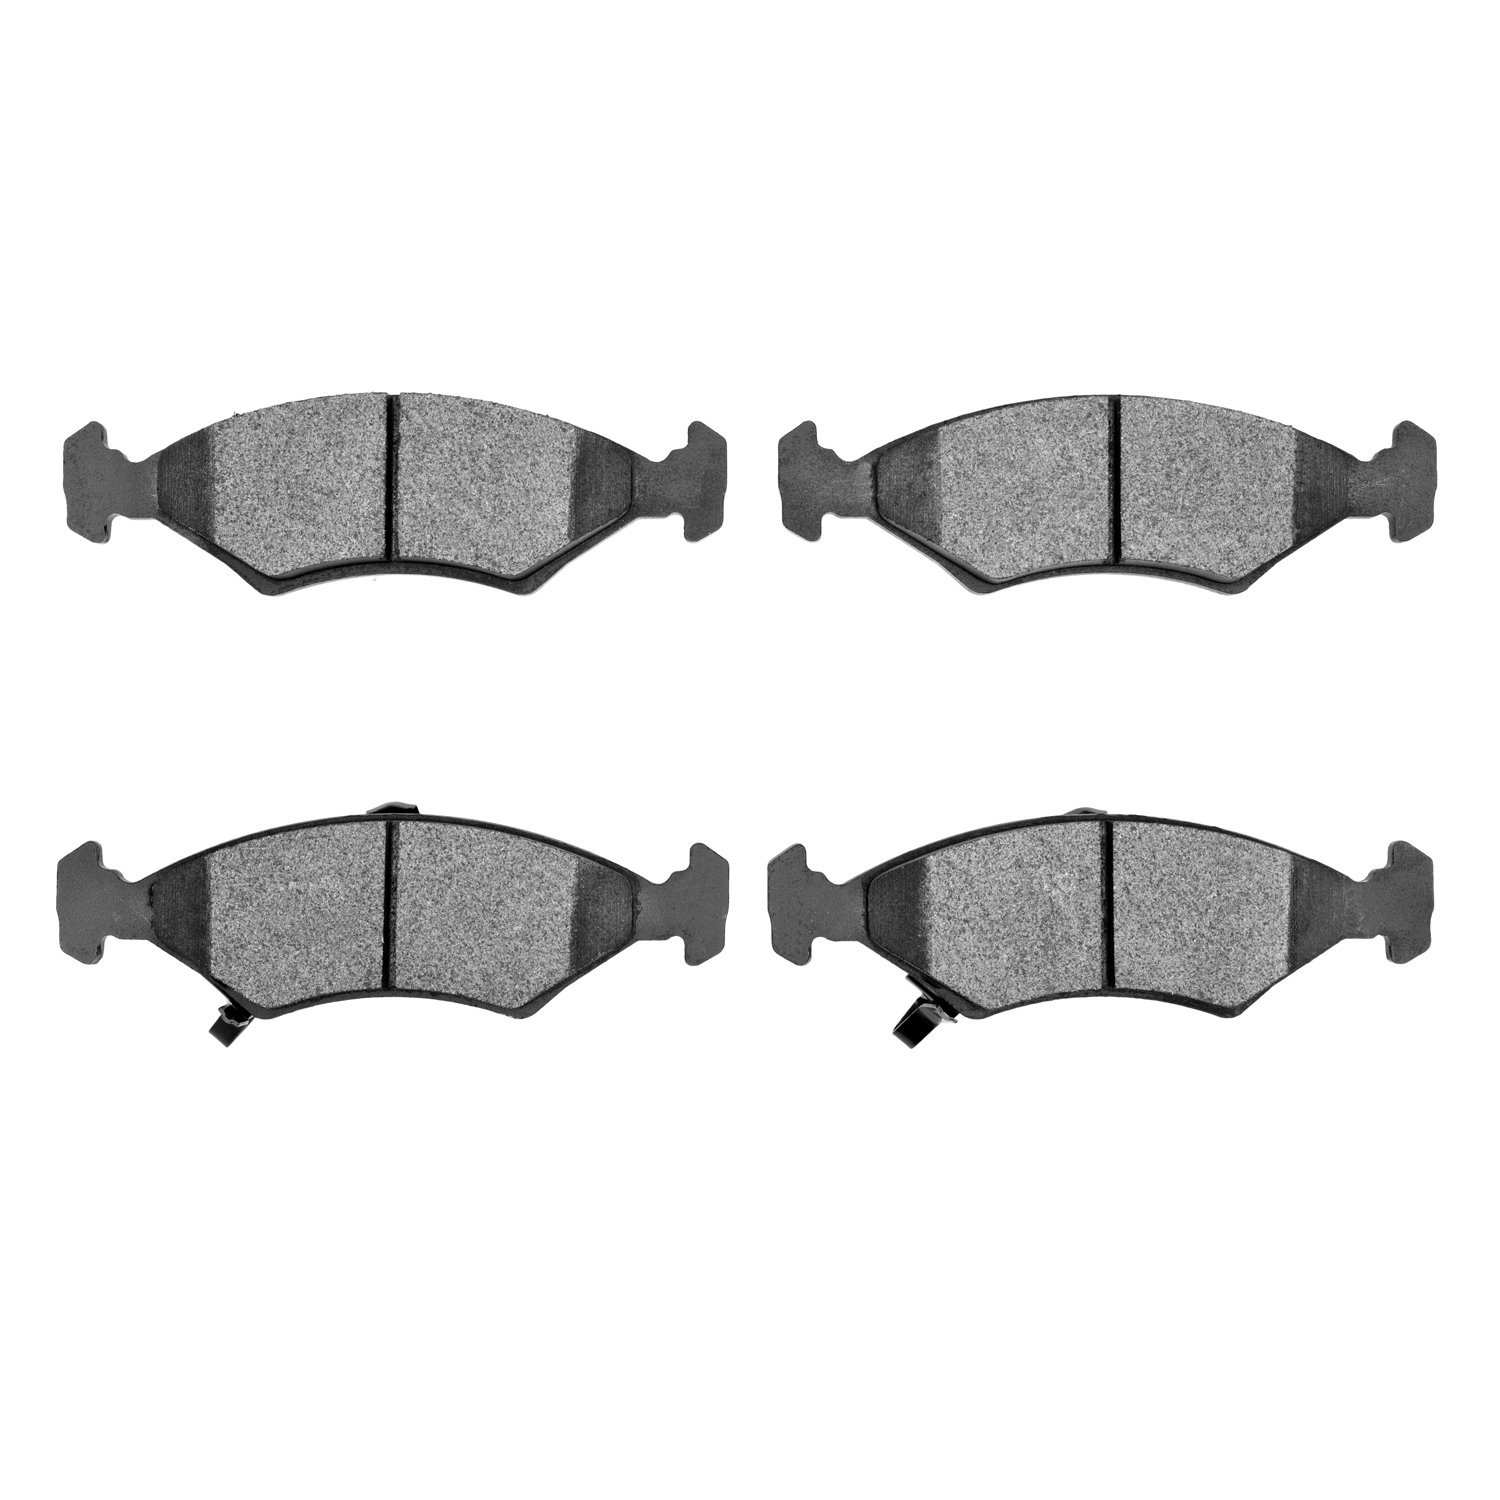 Optimum OE Brake Pads, 1982-2000 Fits Multiple Makes/Models, Position: Front & Rear